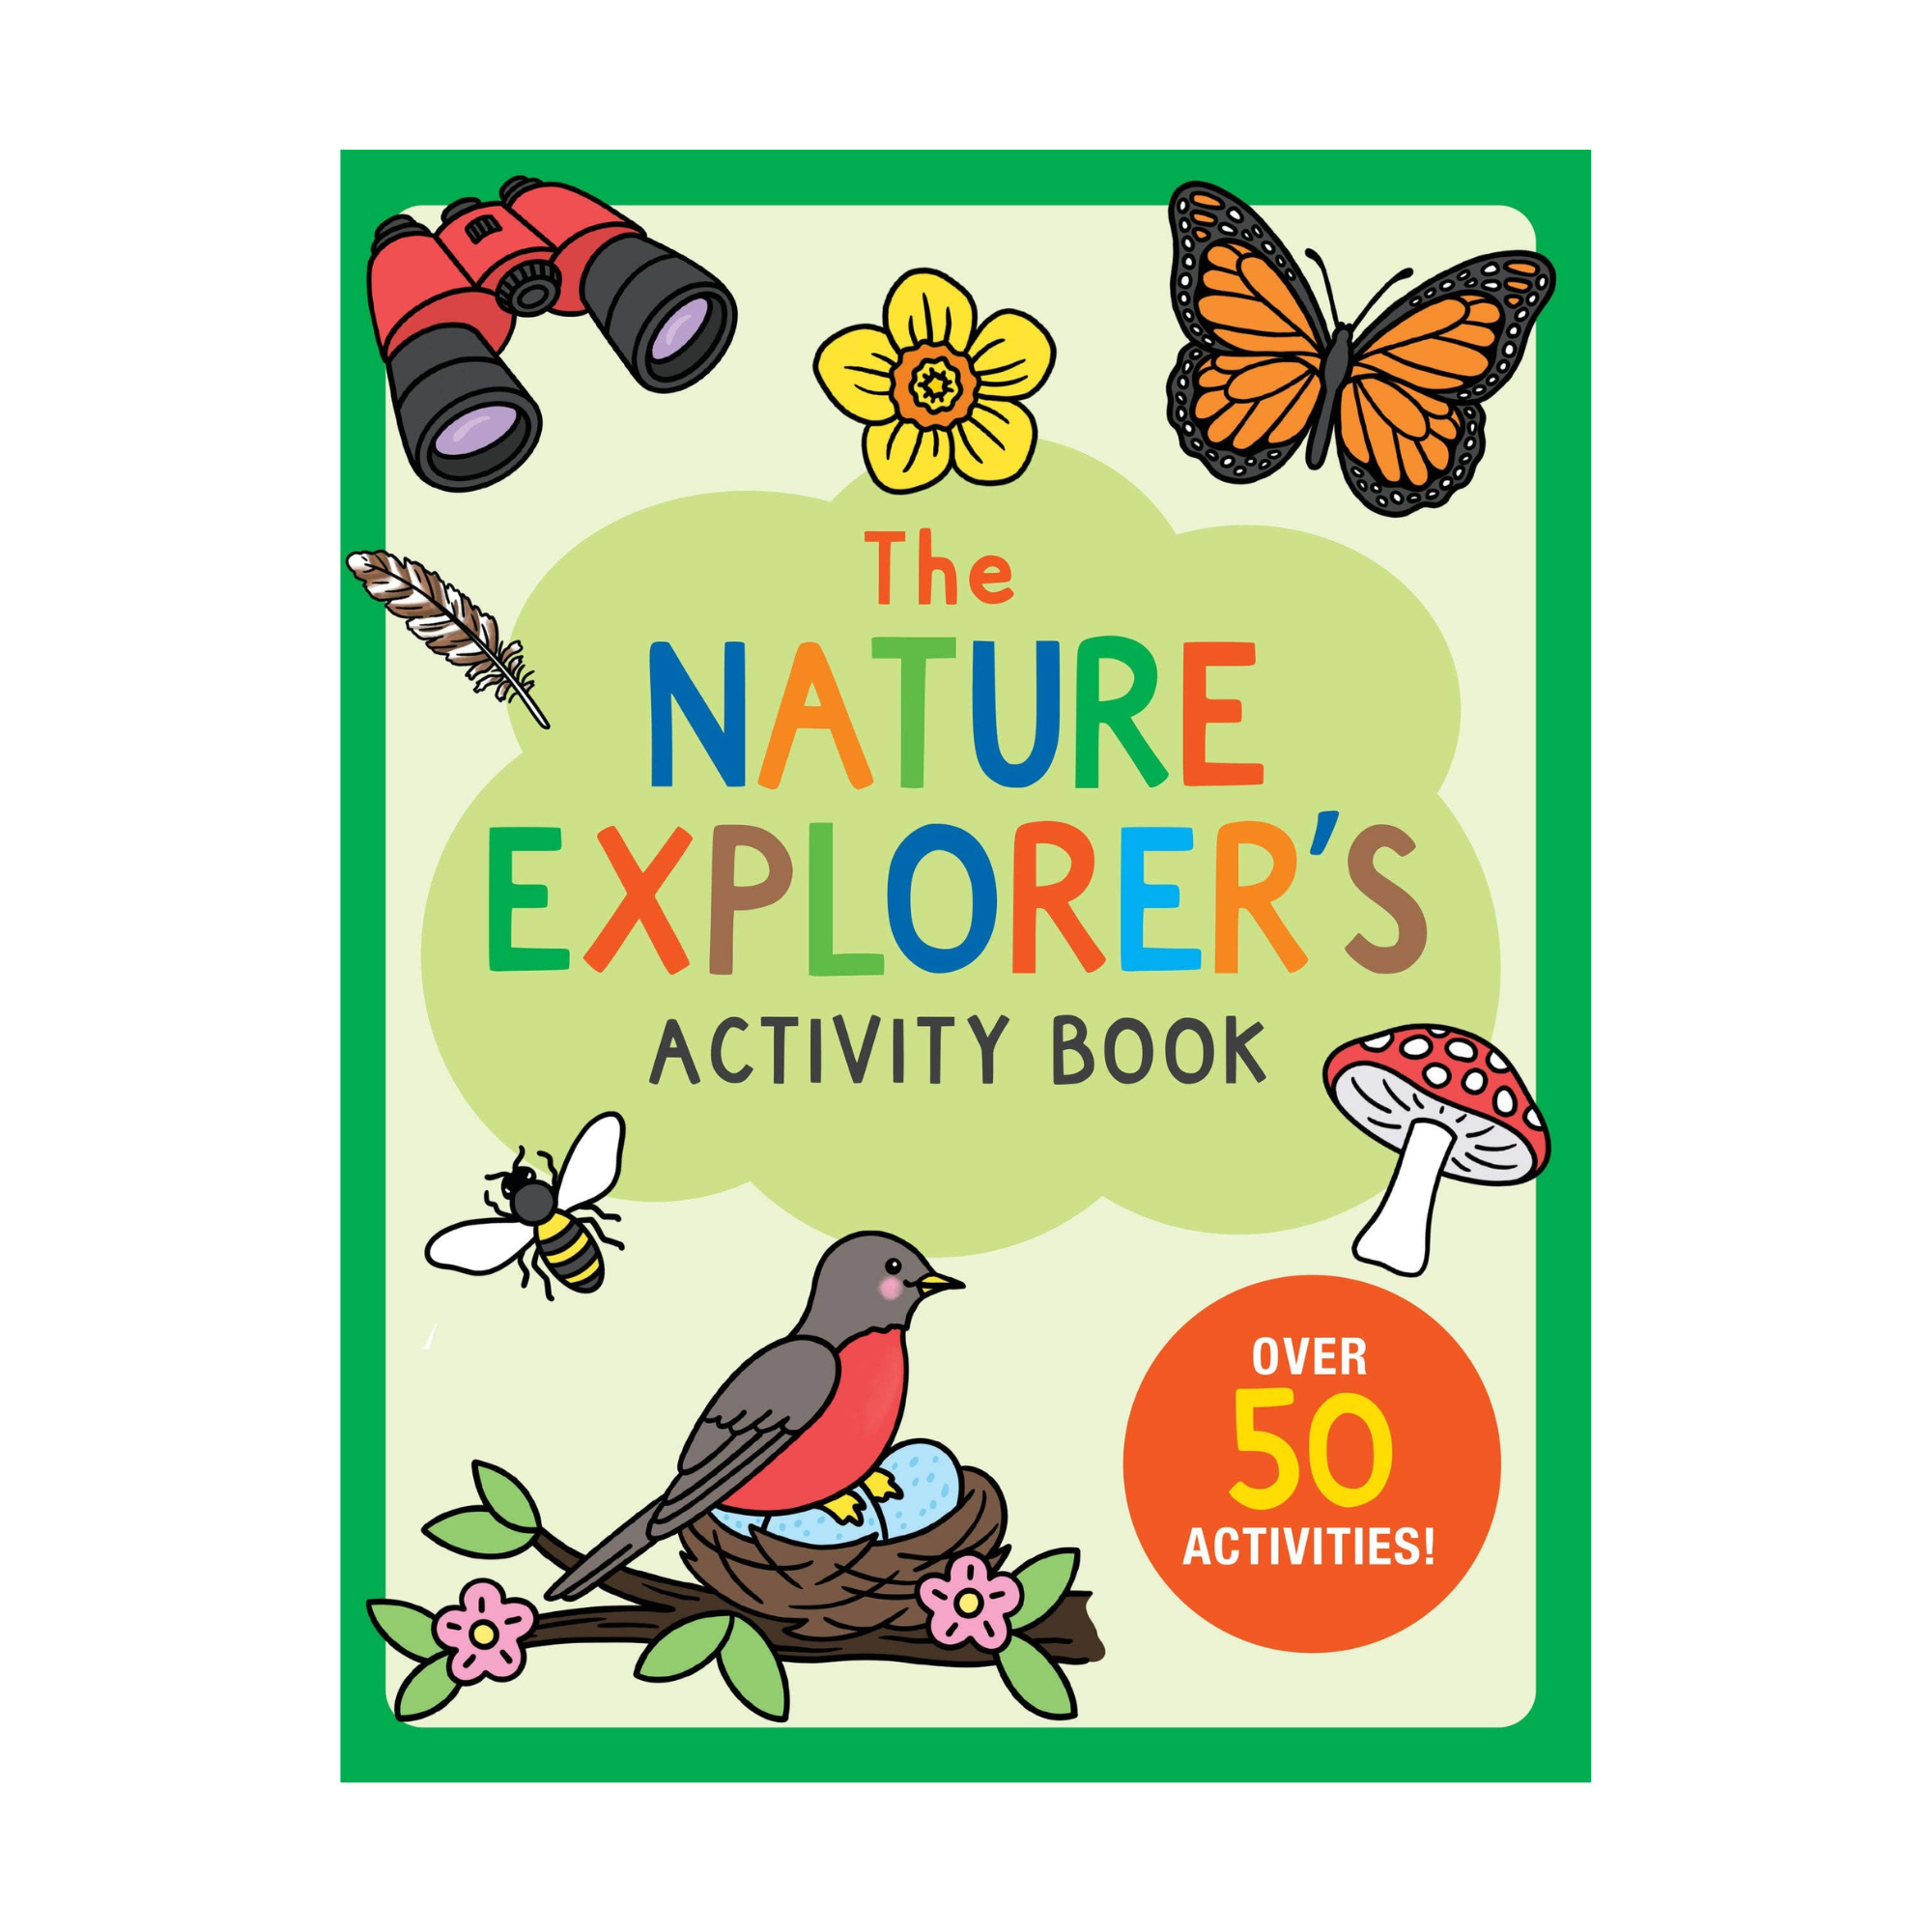 The Nature Explorer's Activity Book